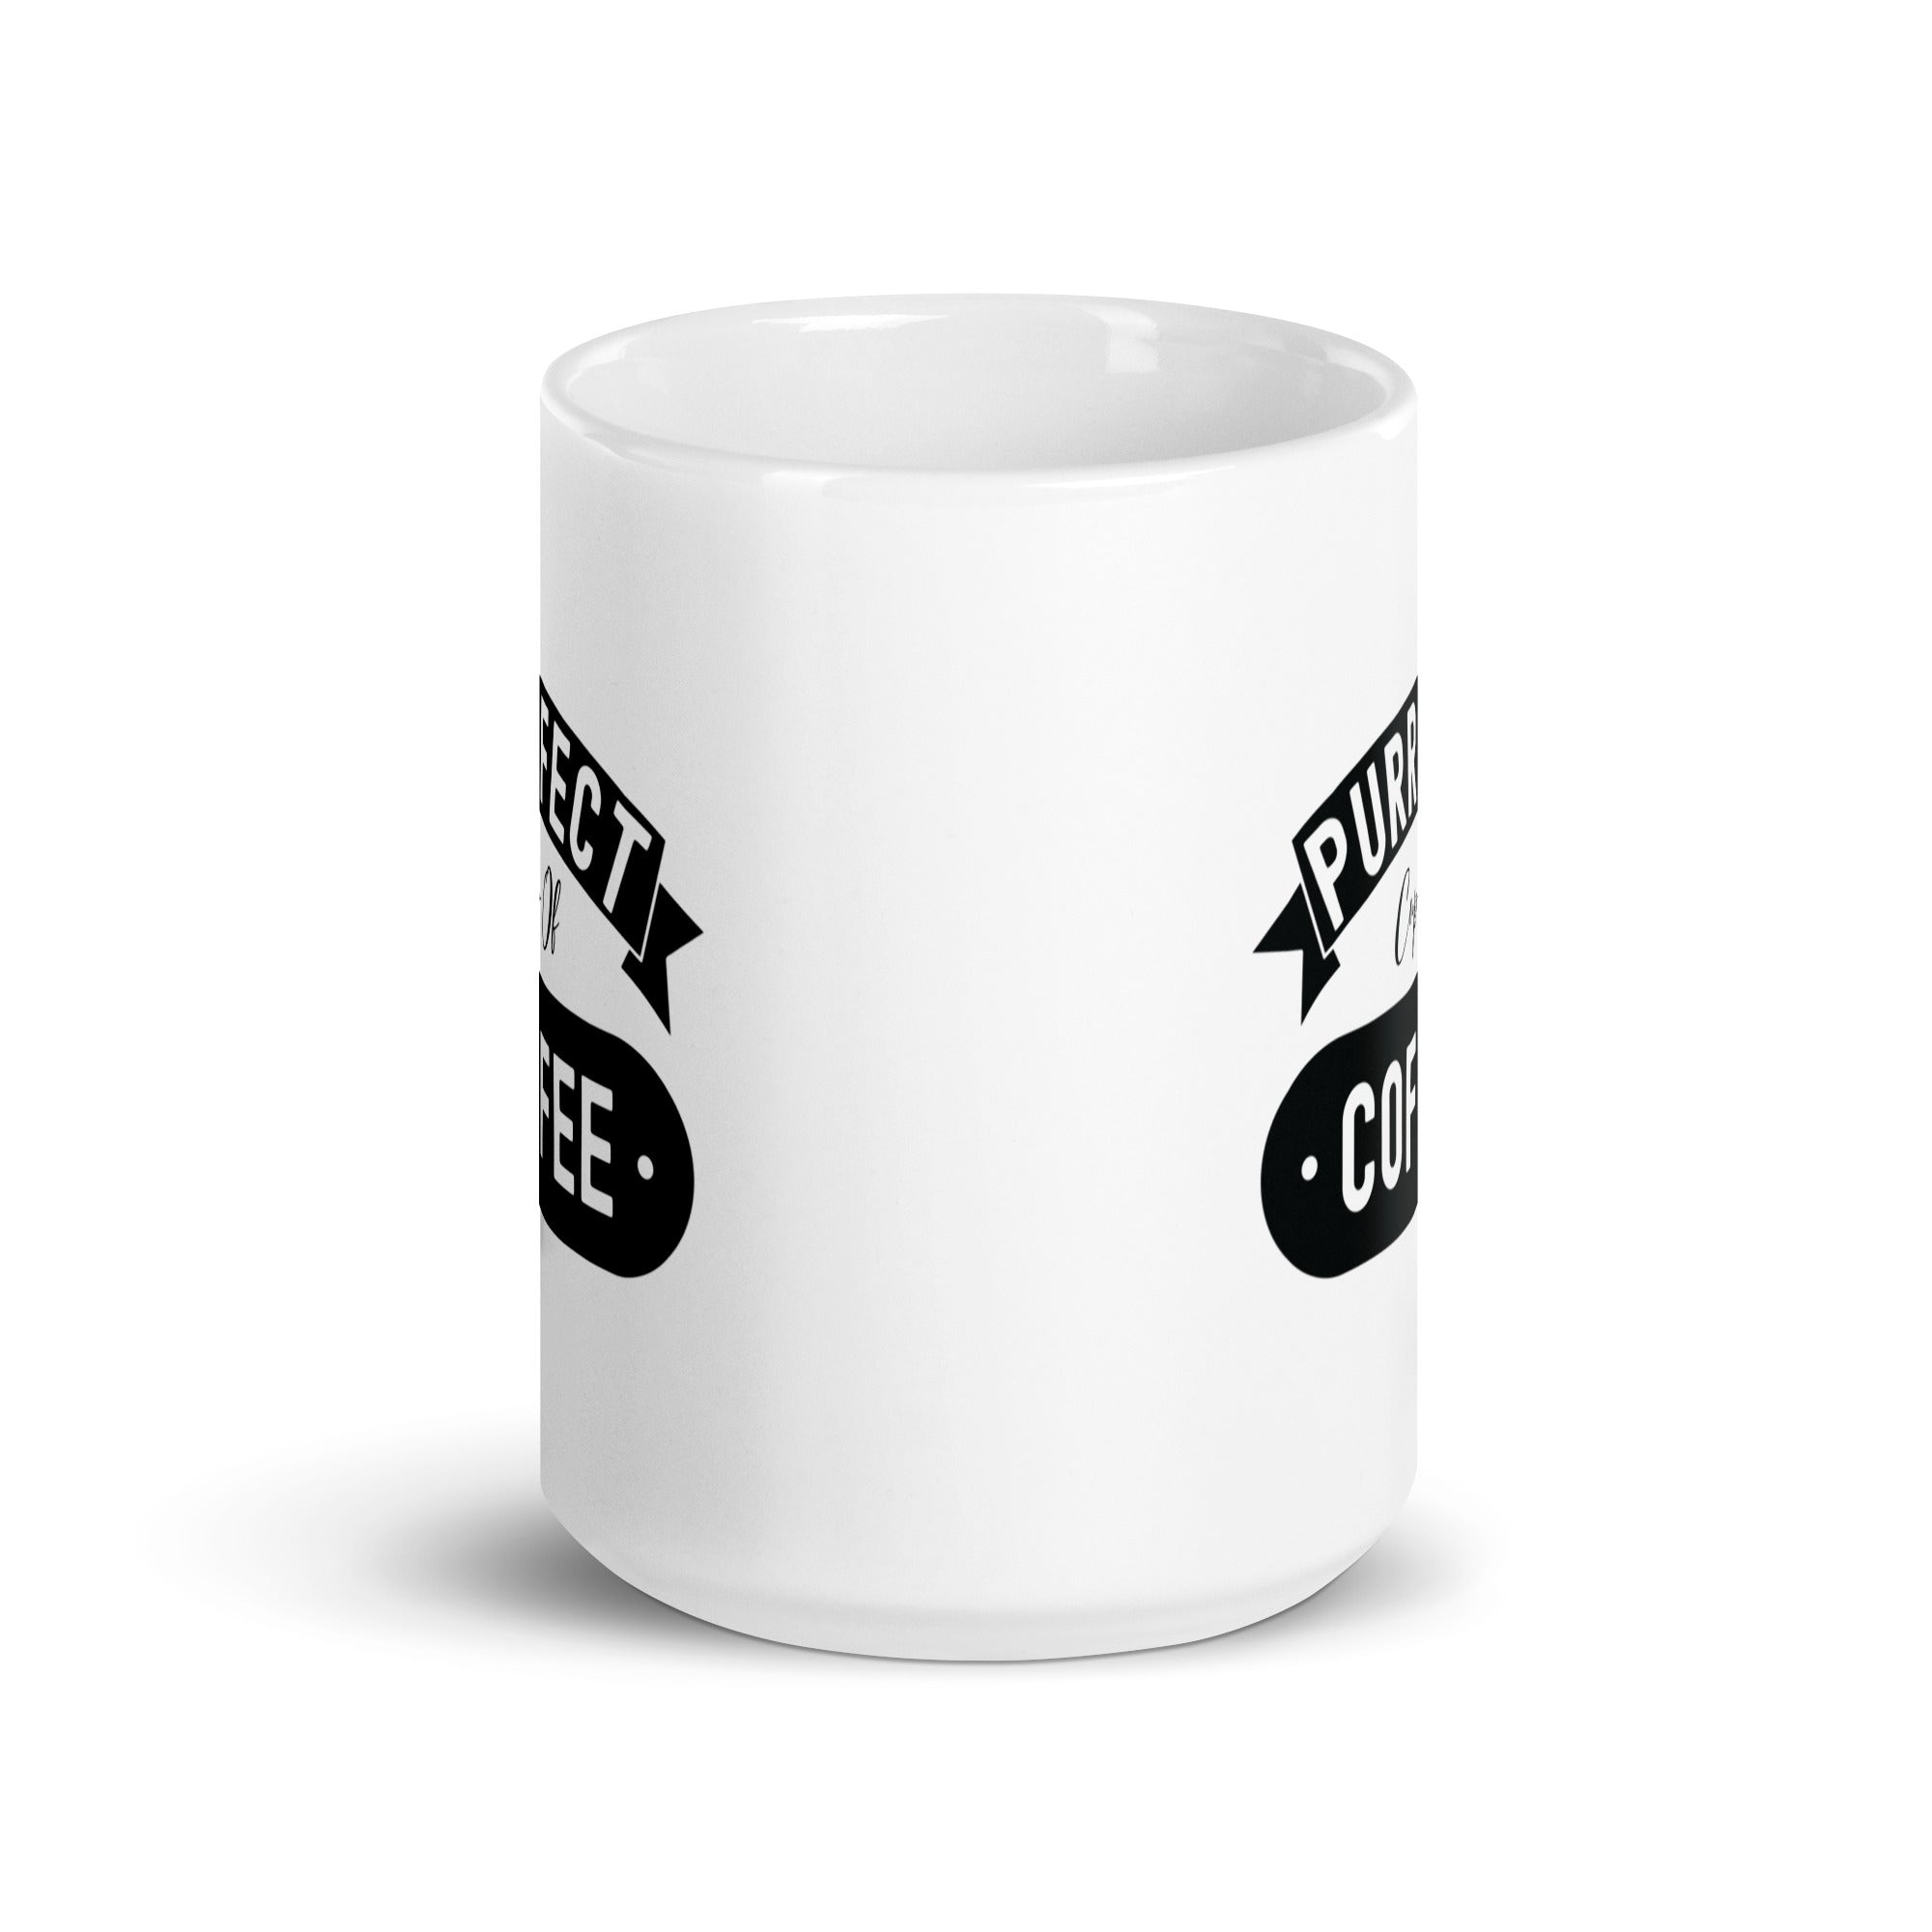 White glossy mug | Purrfect cup of coffee